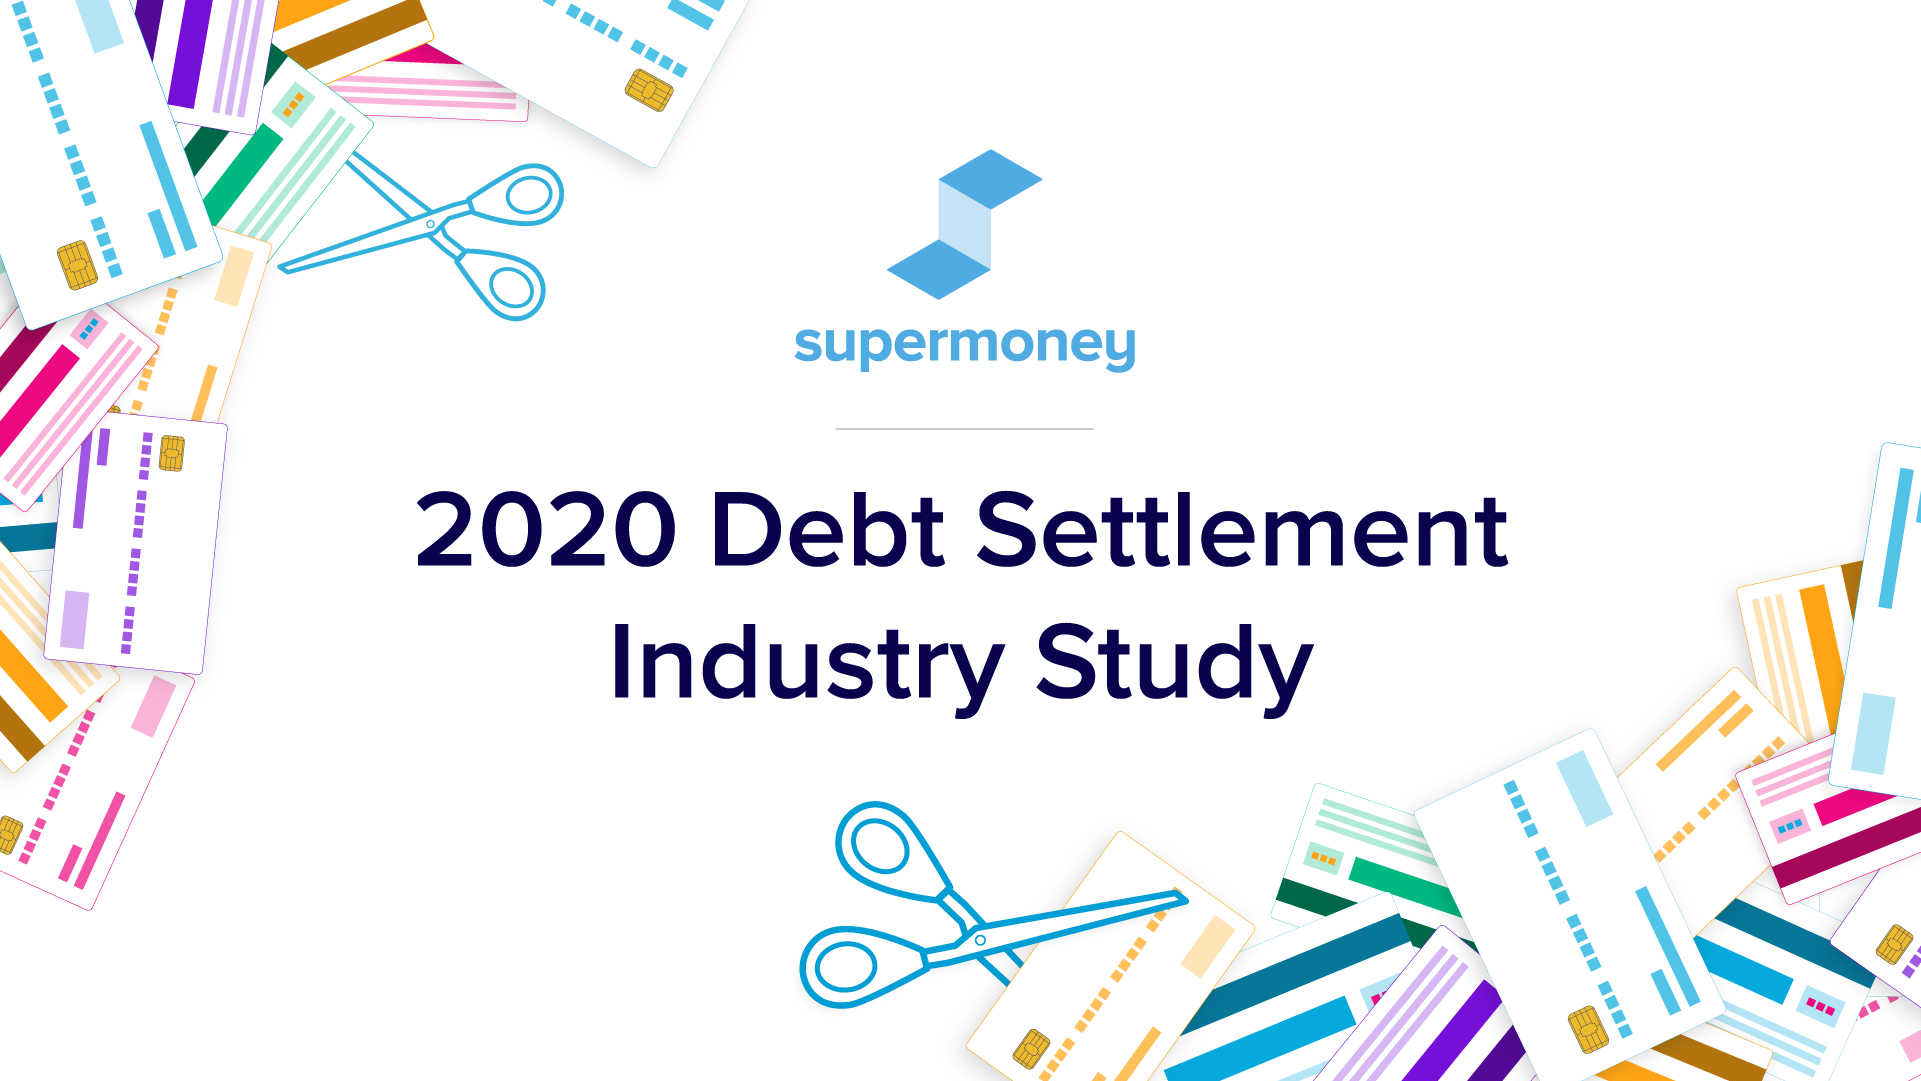 SuperMoney debt settlement